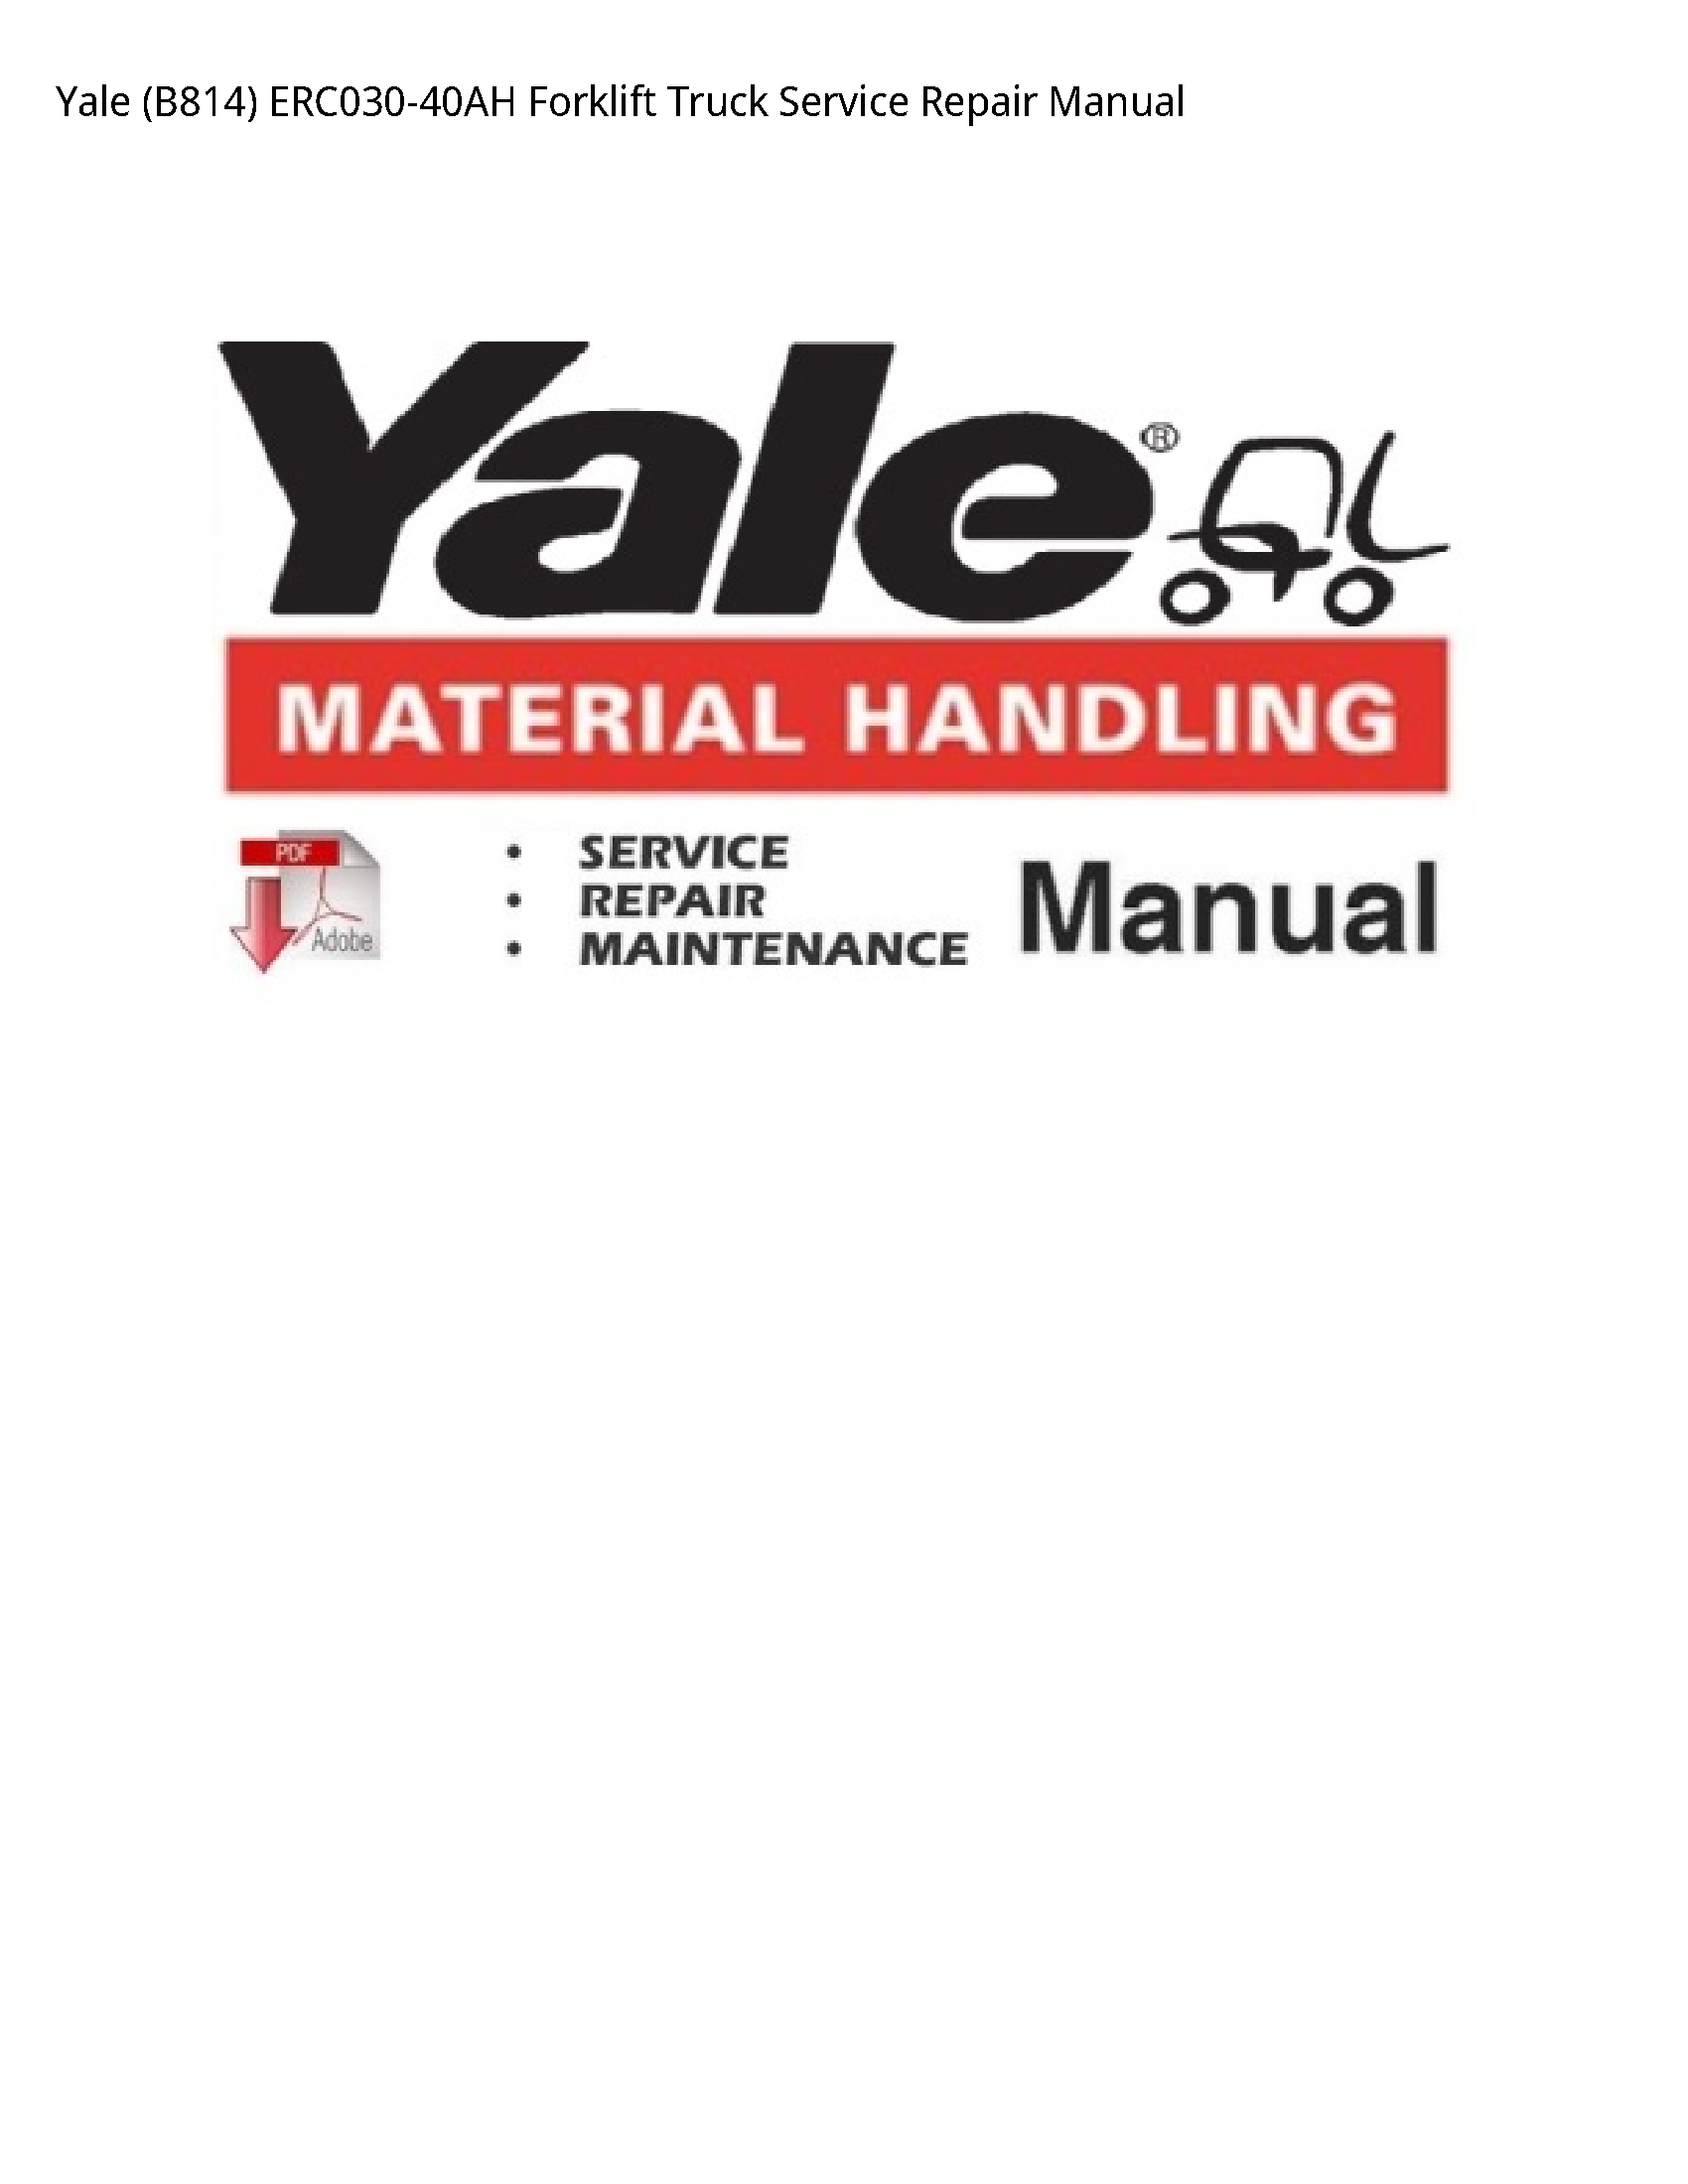 Yale (B814) Forklift Truck manual